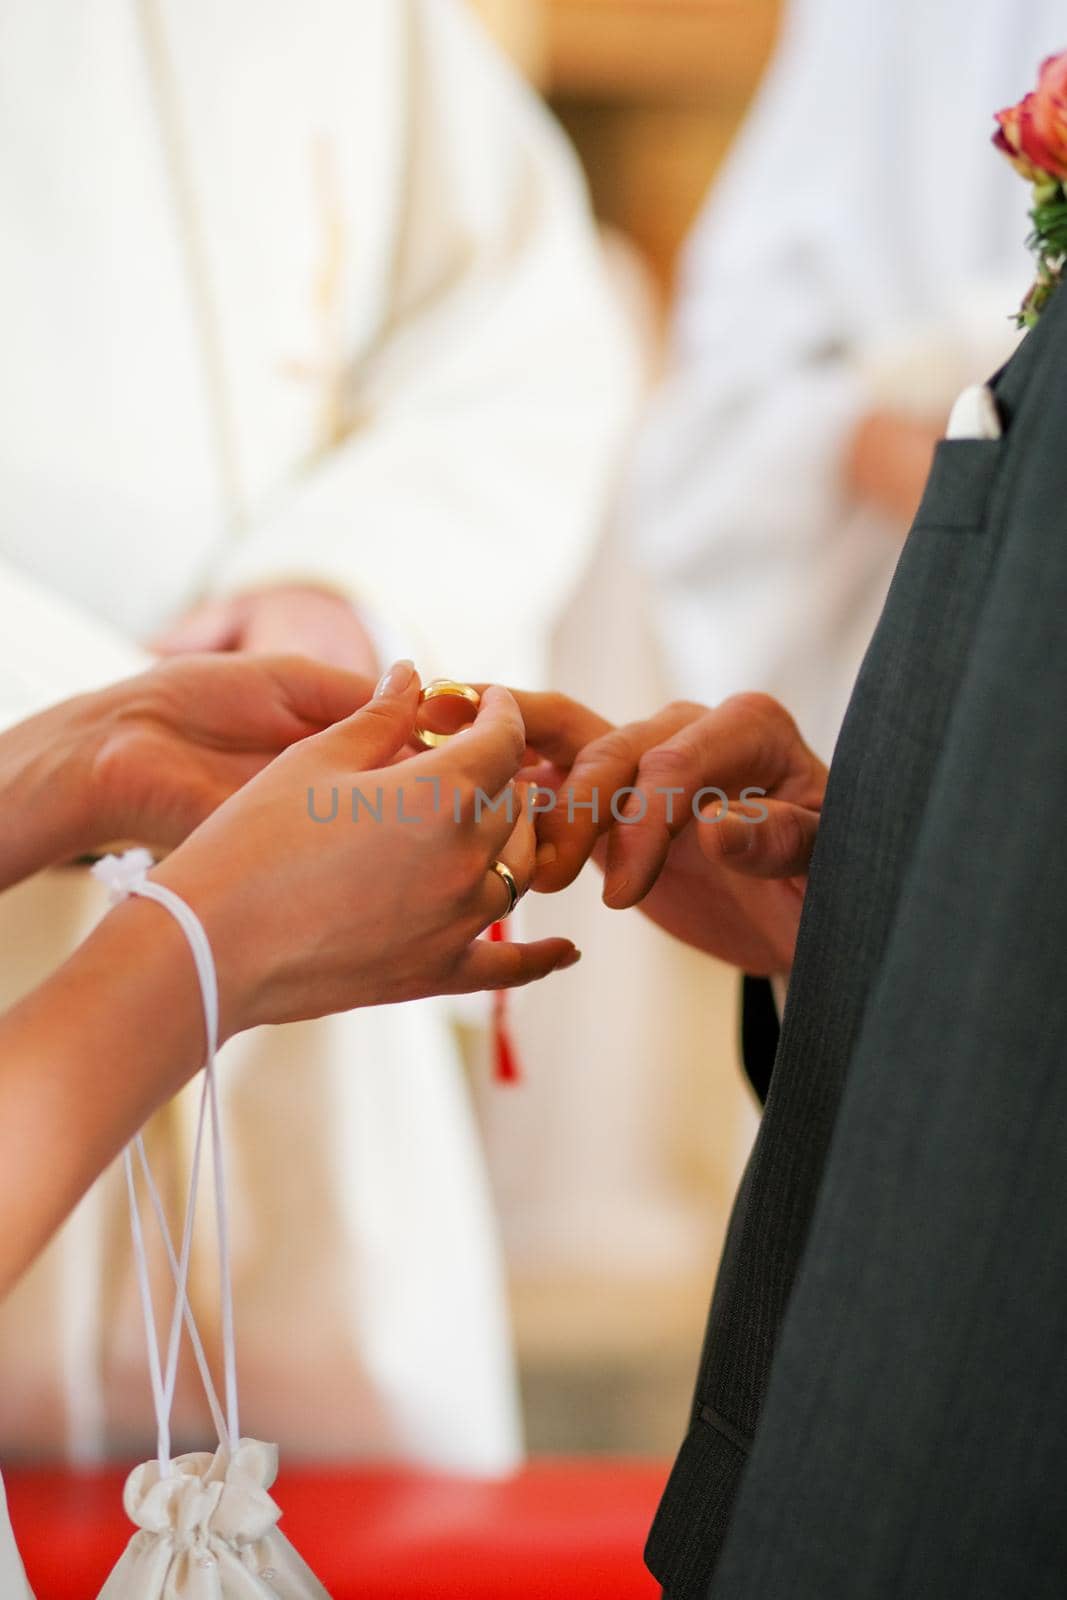 Bride giving ring to groom in wedding by Kzenon